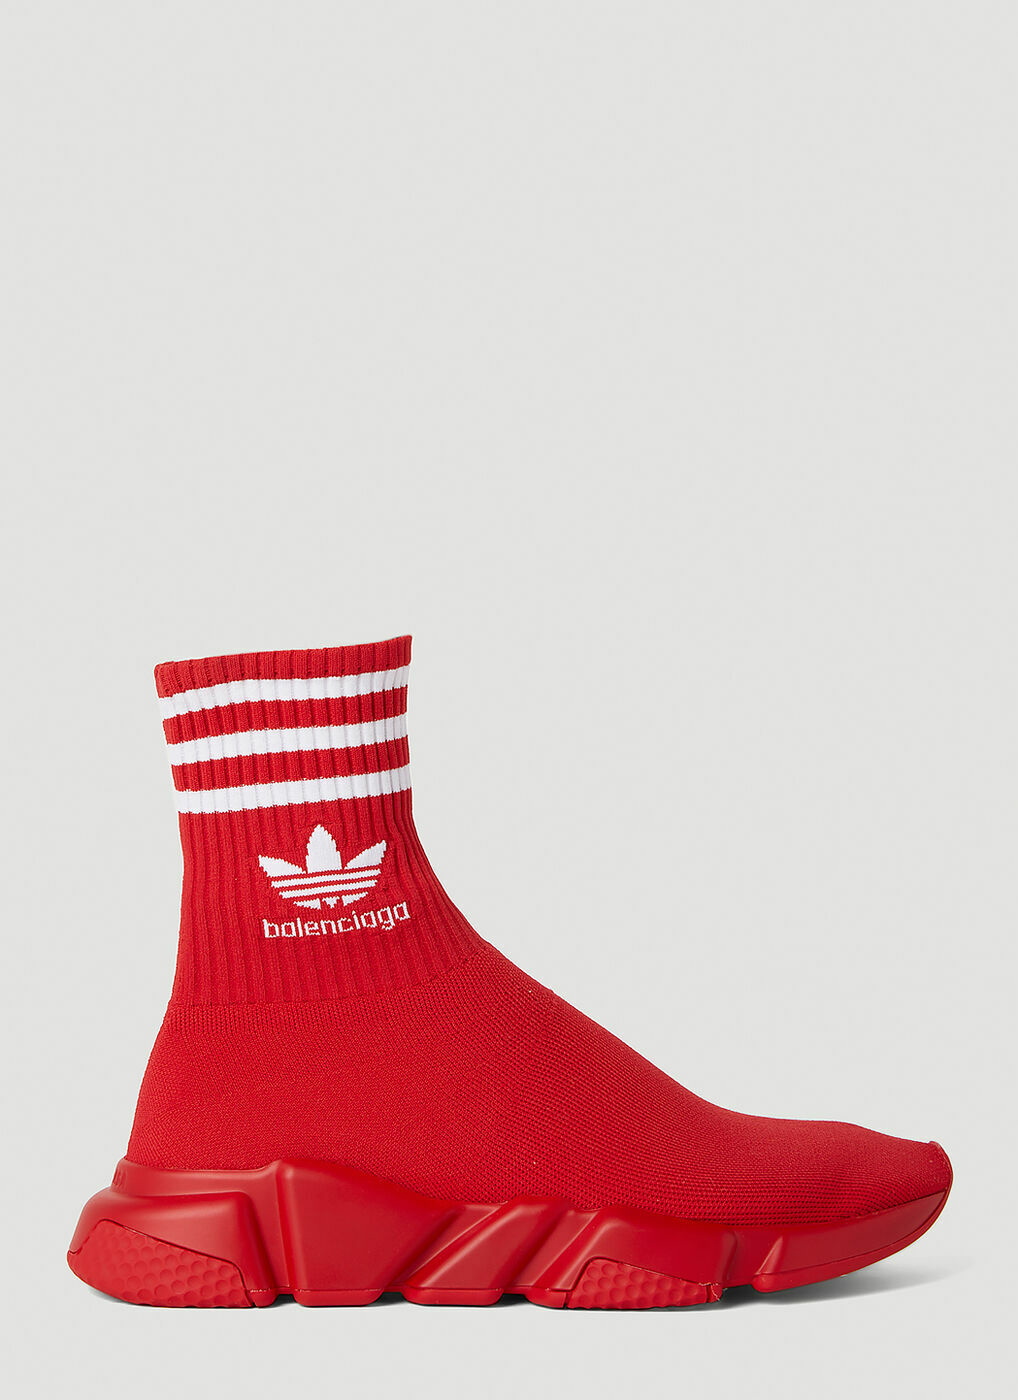 adidas x Balenciaga - Speed Sneakers in Red adidas